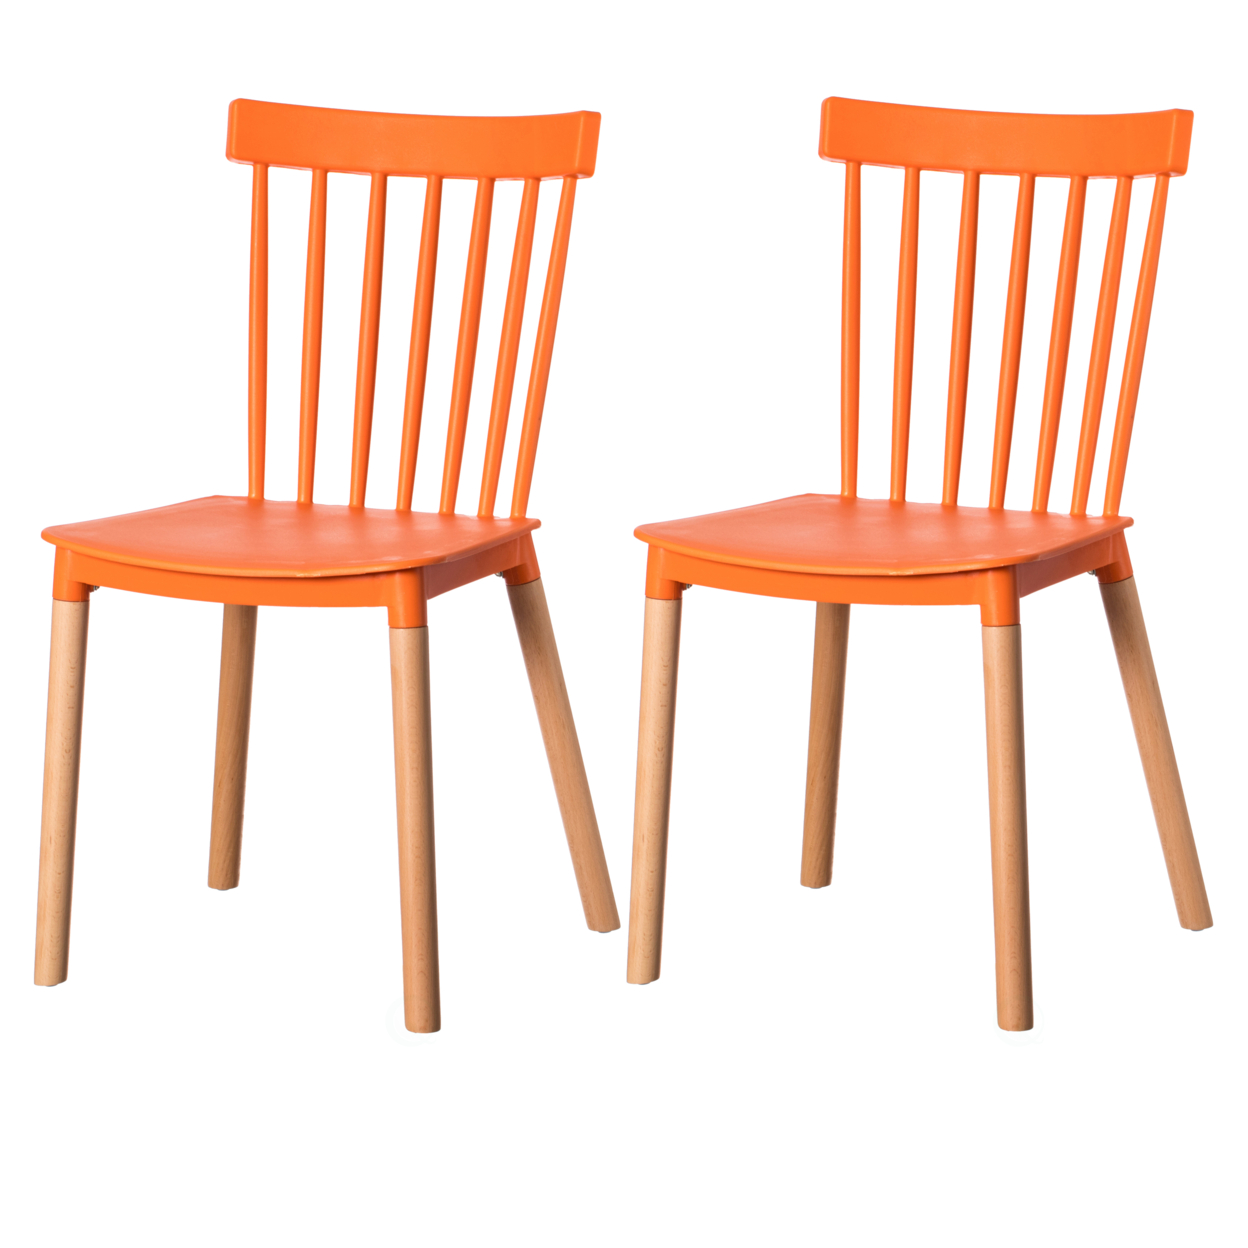 Modern Plastic Dining Chair Windsor Design With Beech Wood Legs - Set Of 2 Orange